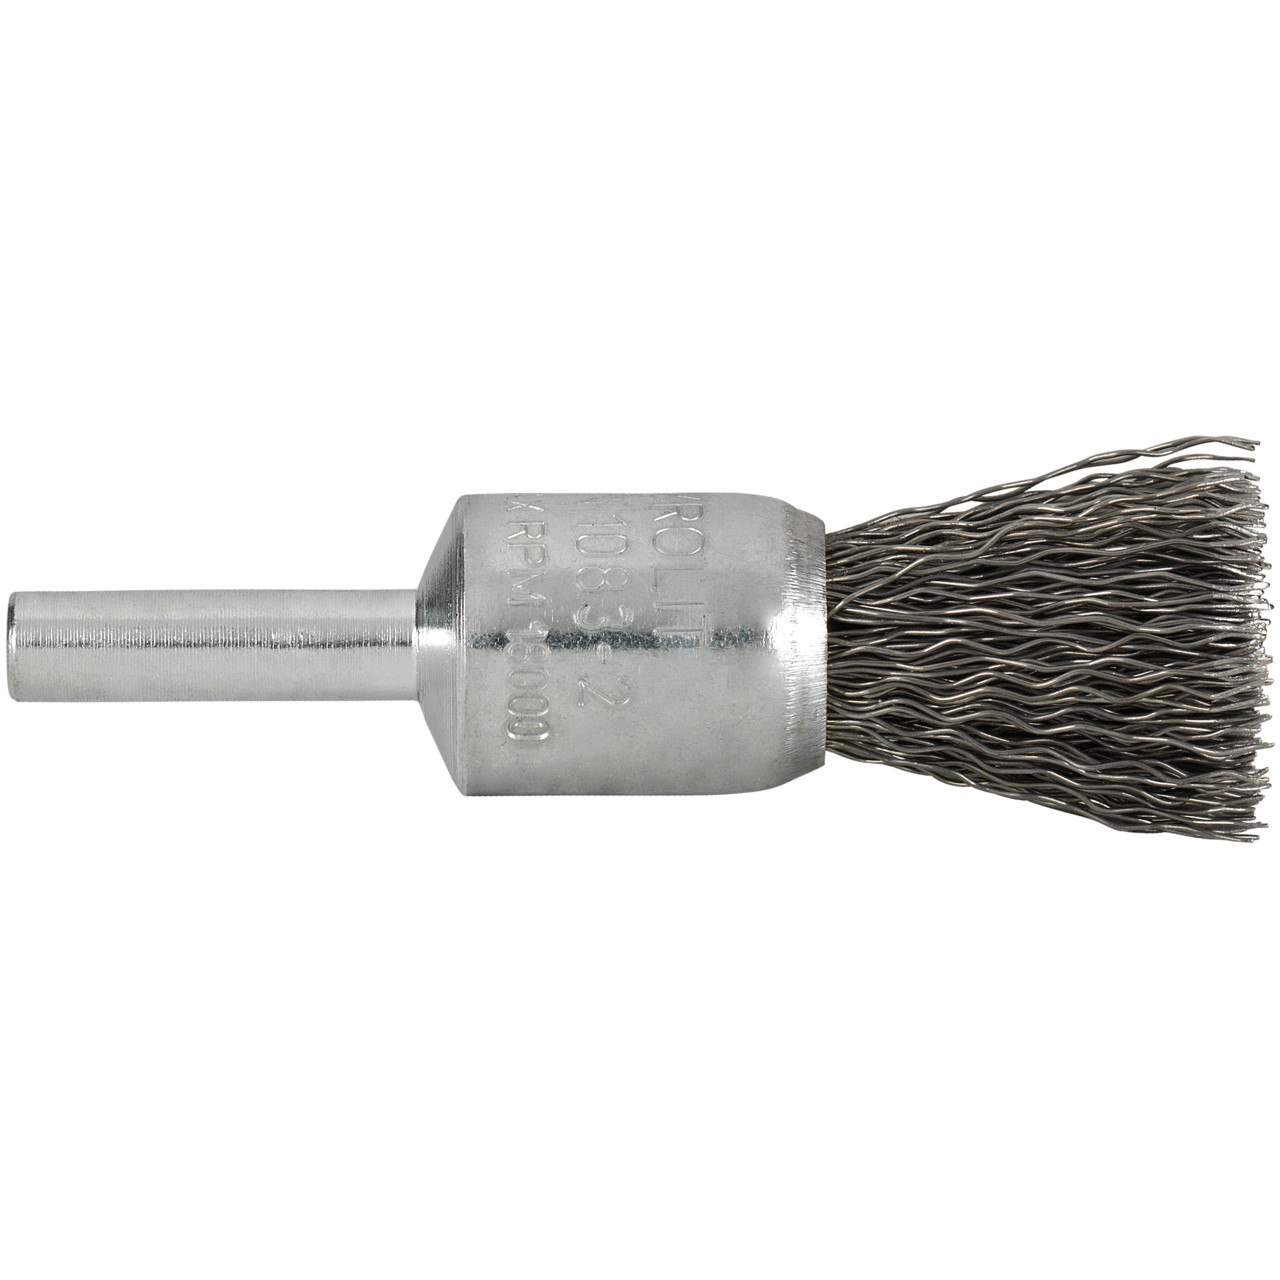 Tyrolit Brush brushes DxH-GExI 12x20-6x60 For steel, shape: 52PDW - (brush brushes), Art. 903431